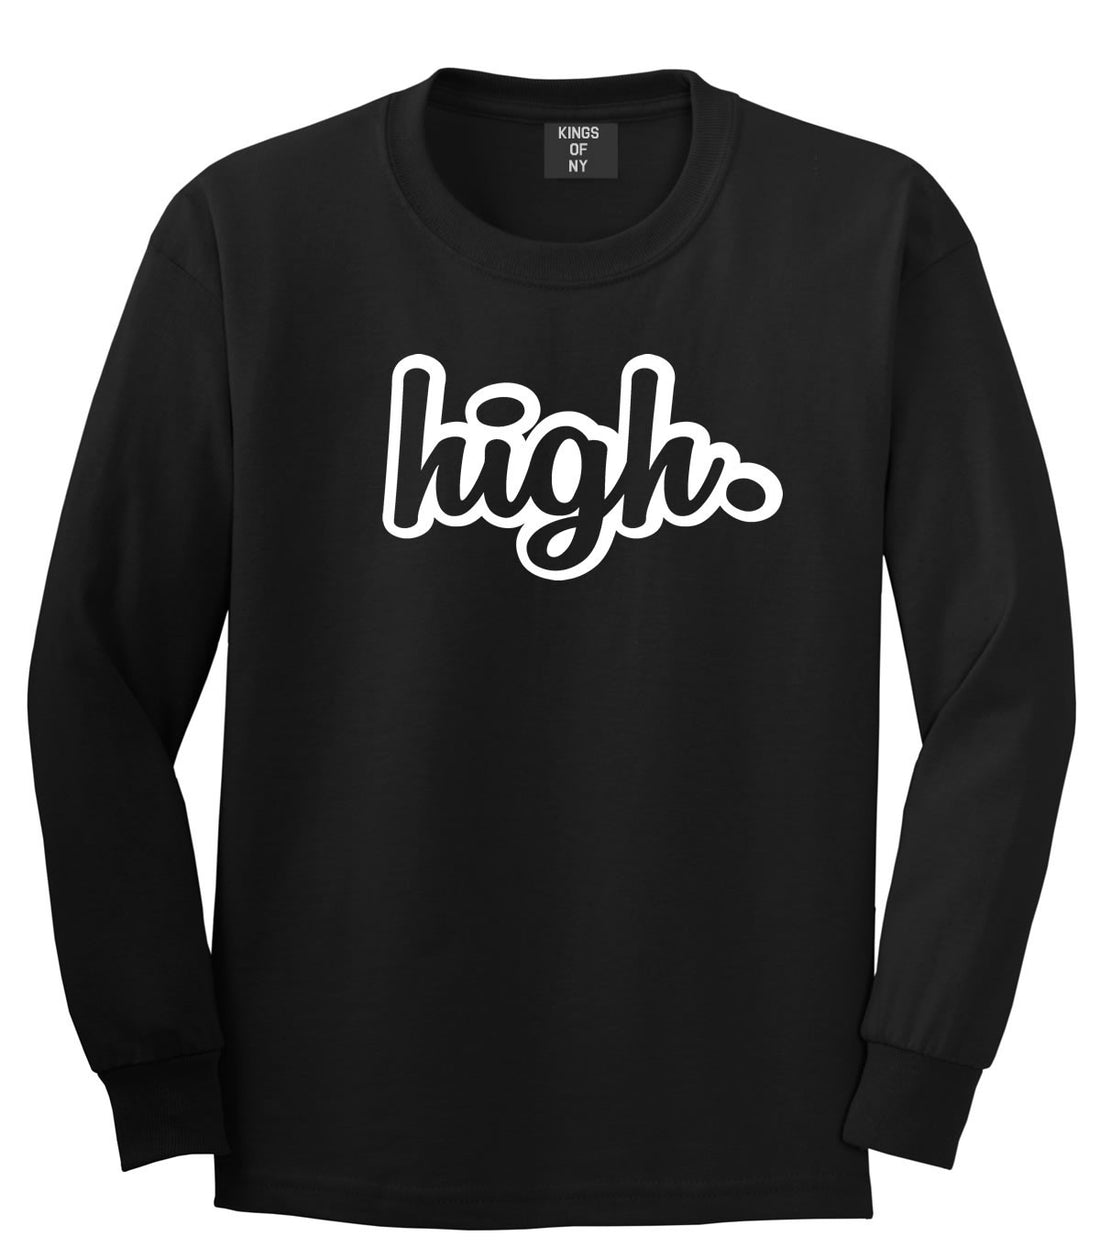 High Weed Faded Dap Smoke Marijuana Long Sleeve Boys Kids T-Shirt In Black by Kings Of NY